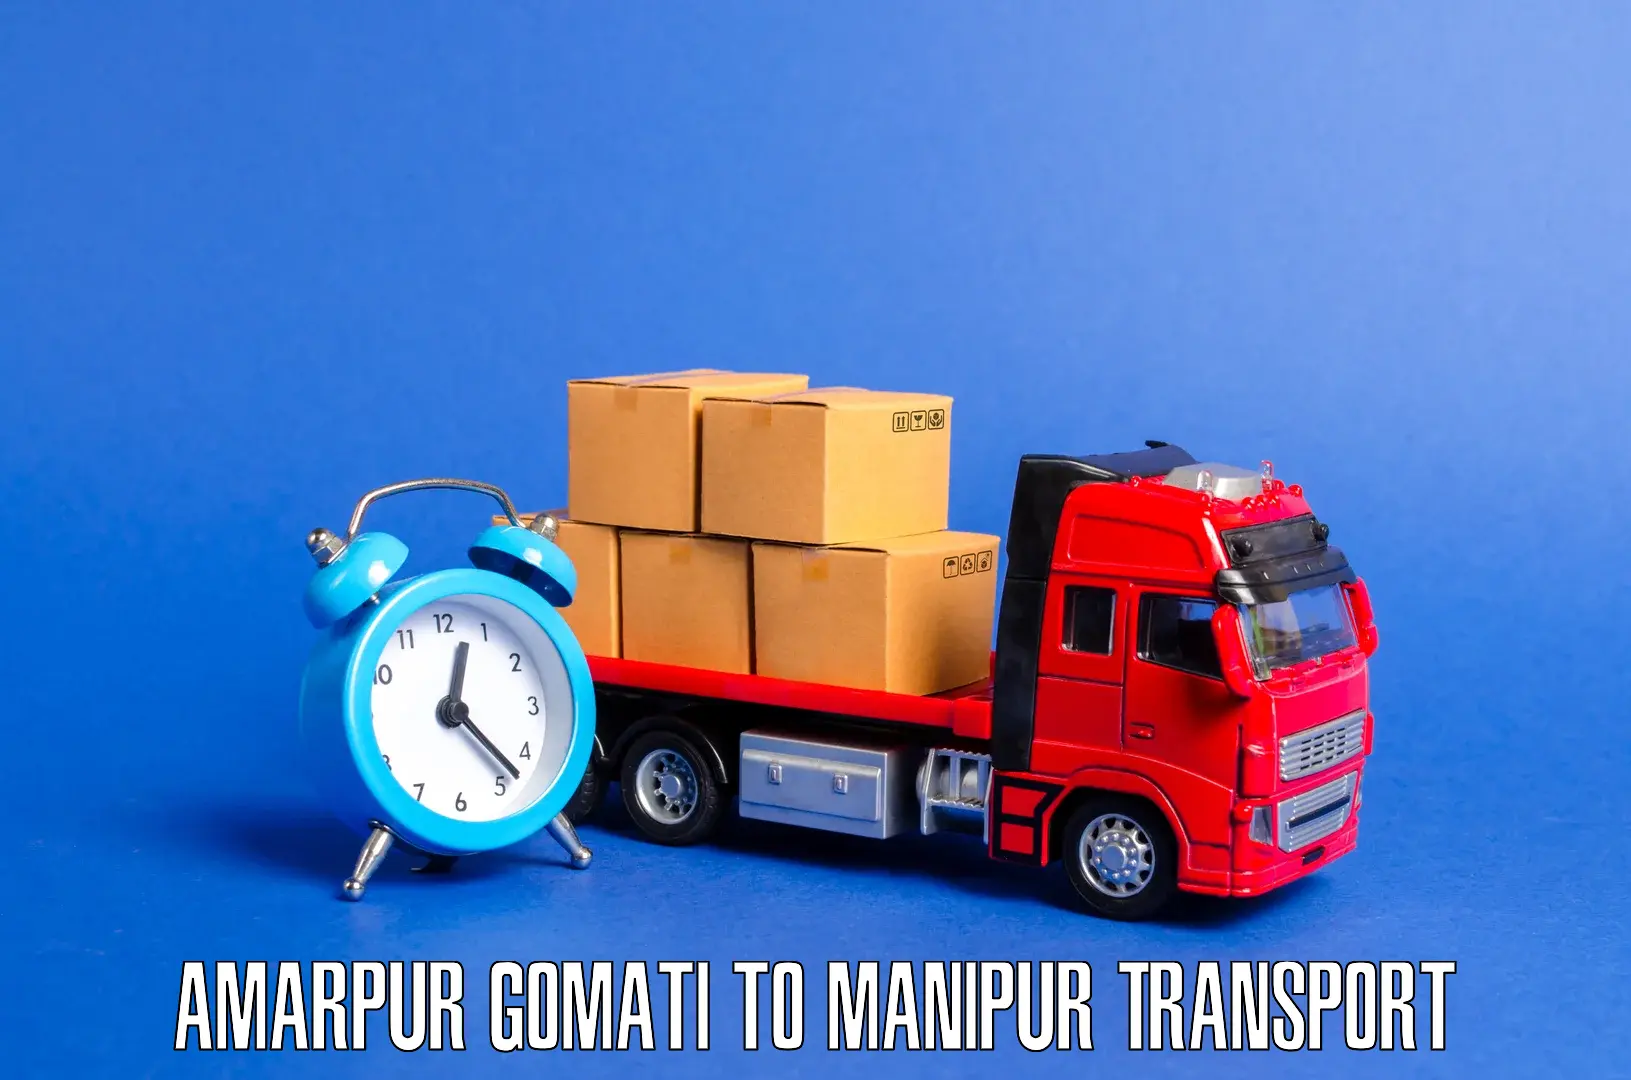 Bike shipping service in Amarpur Gomati to Kanti